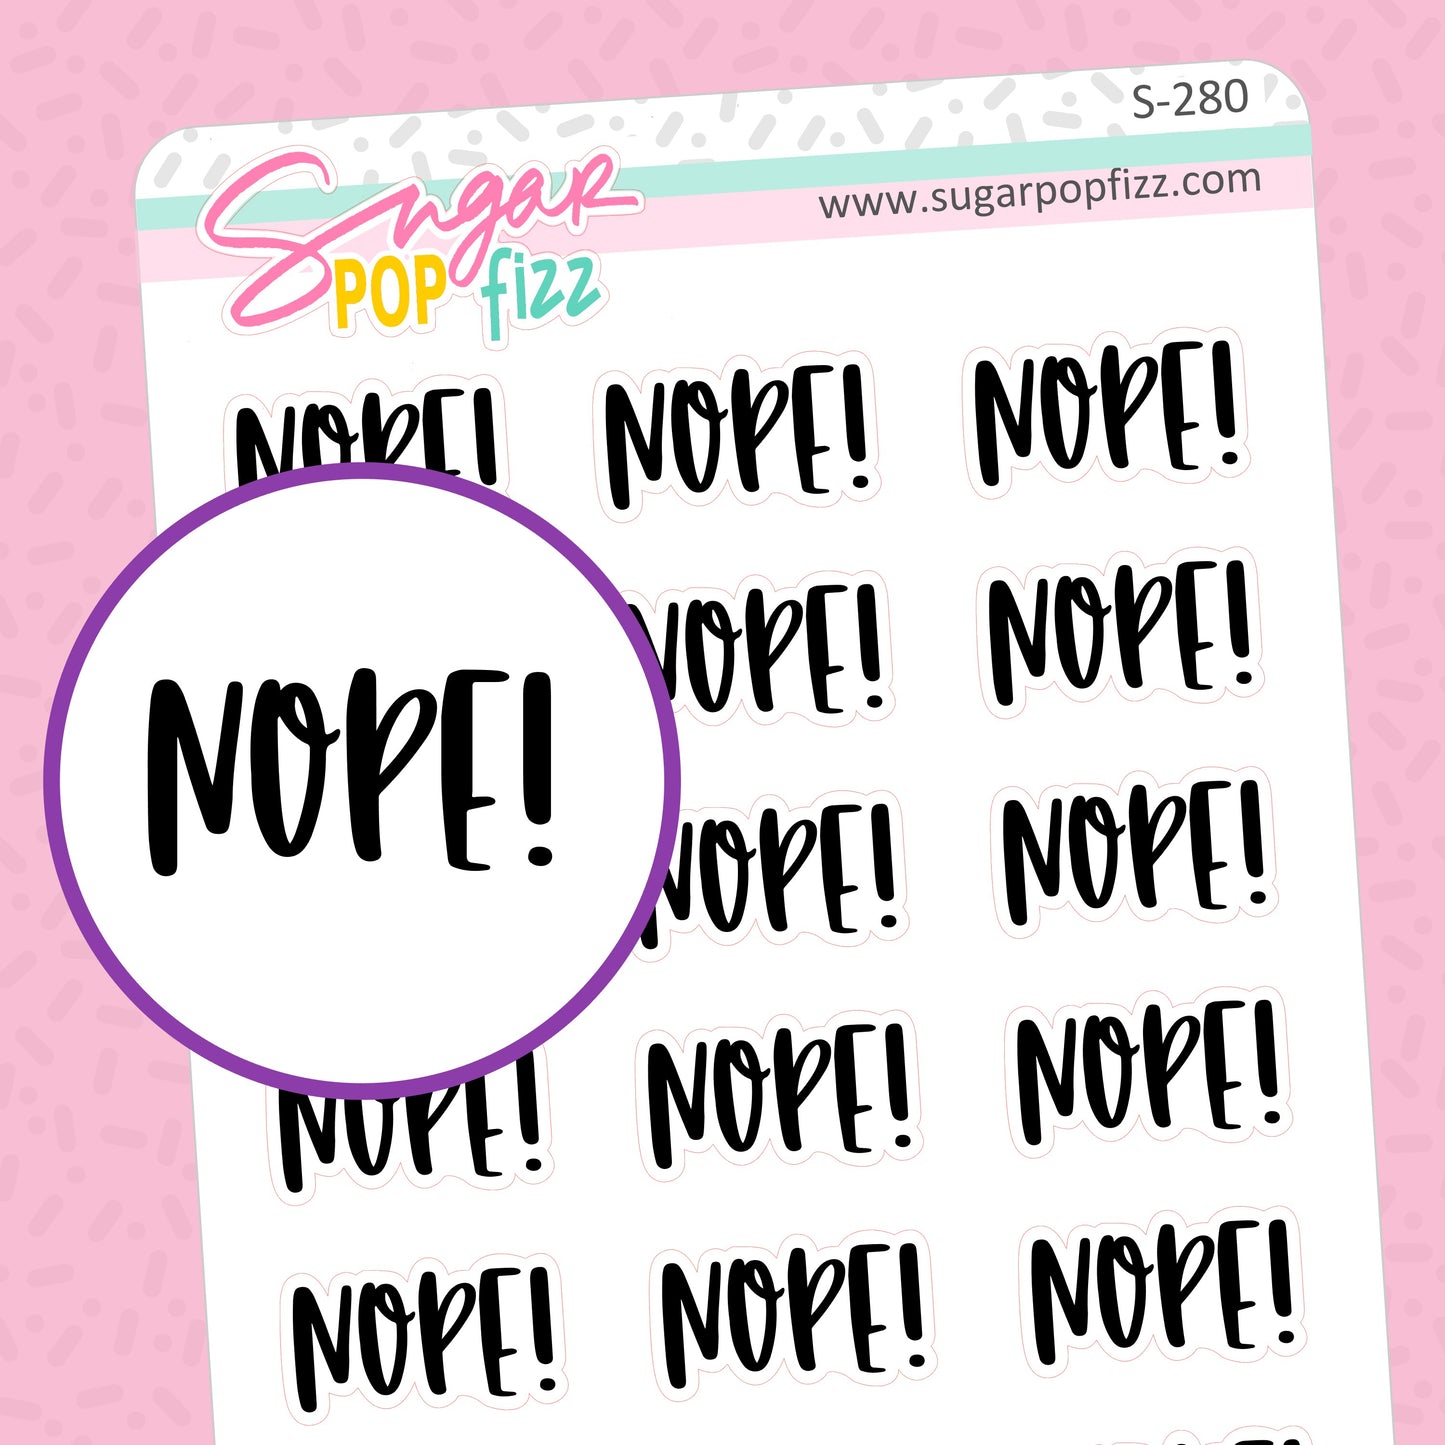 Nope! Script Stickers - S280